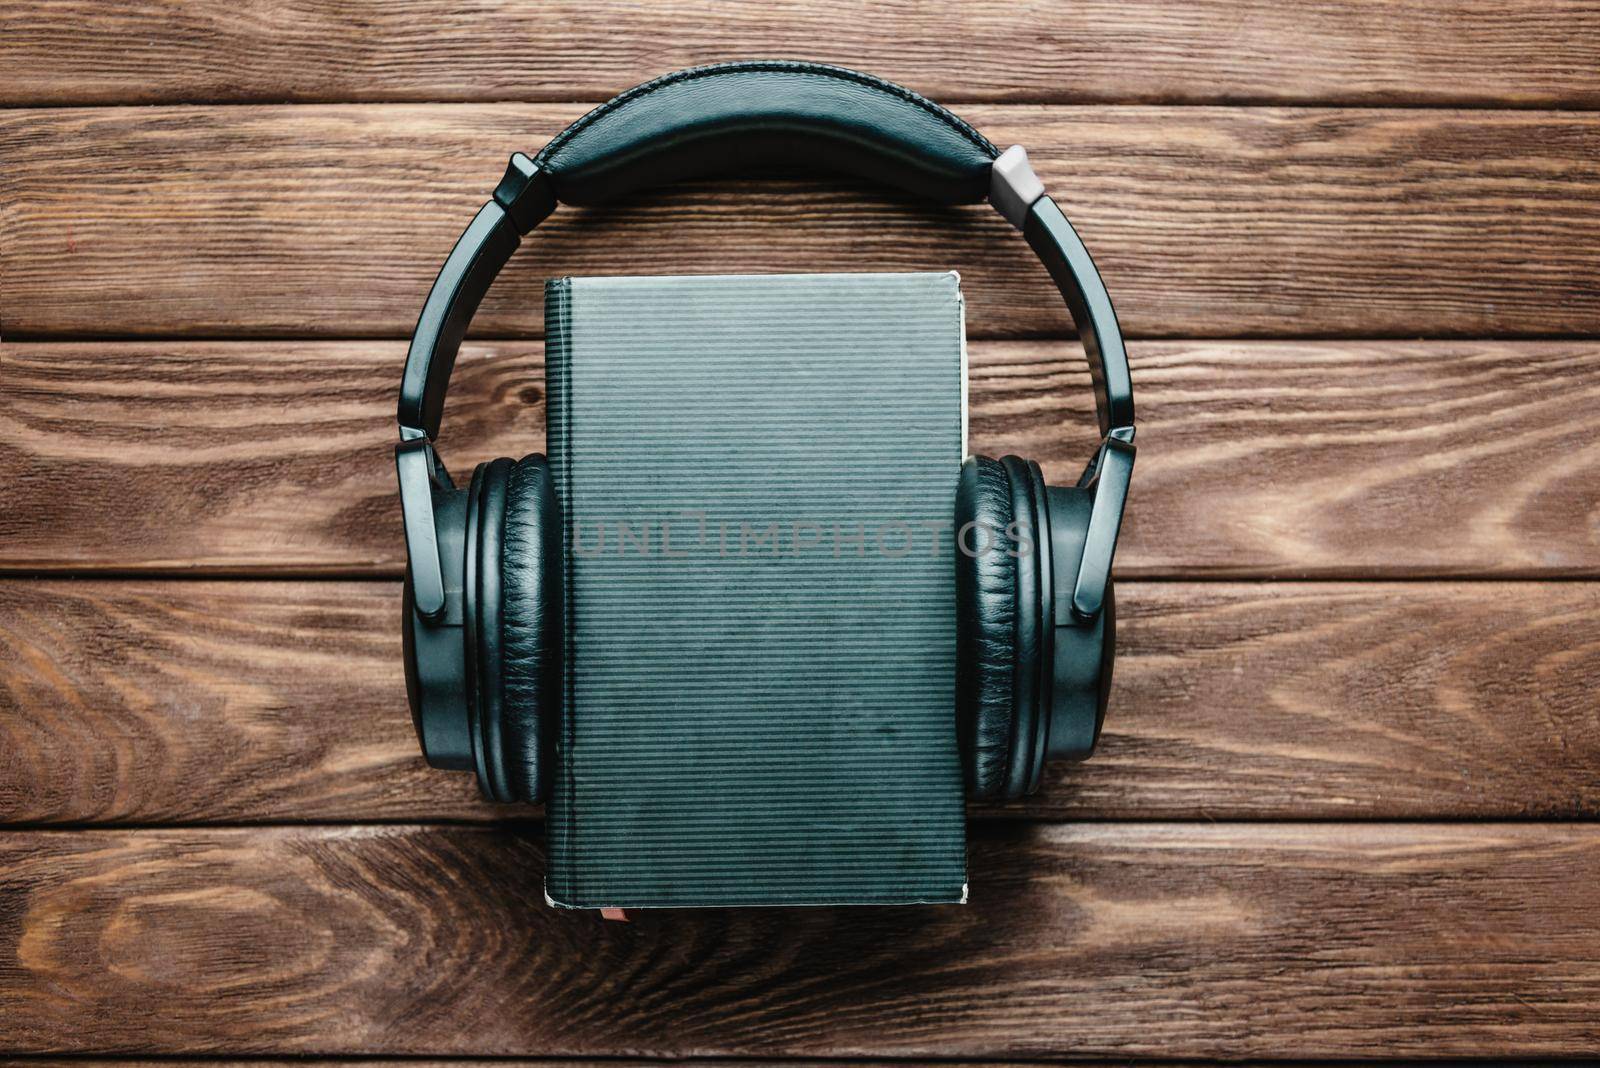 Headphones around a paper book. by alexAleksei